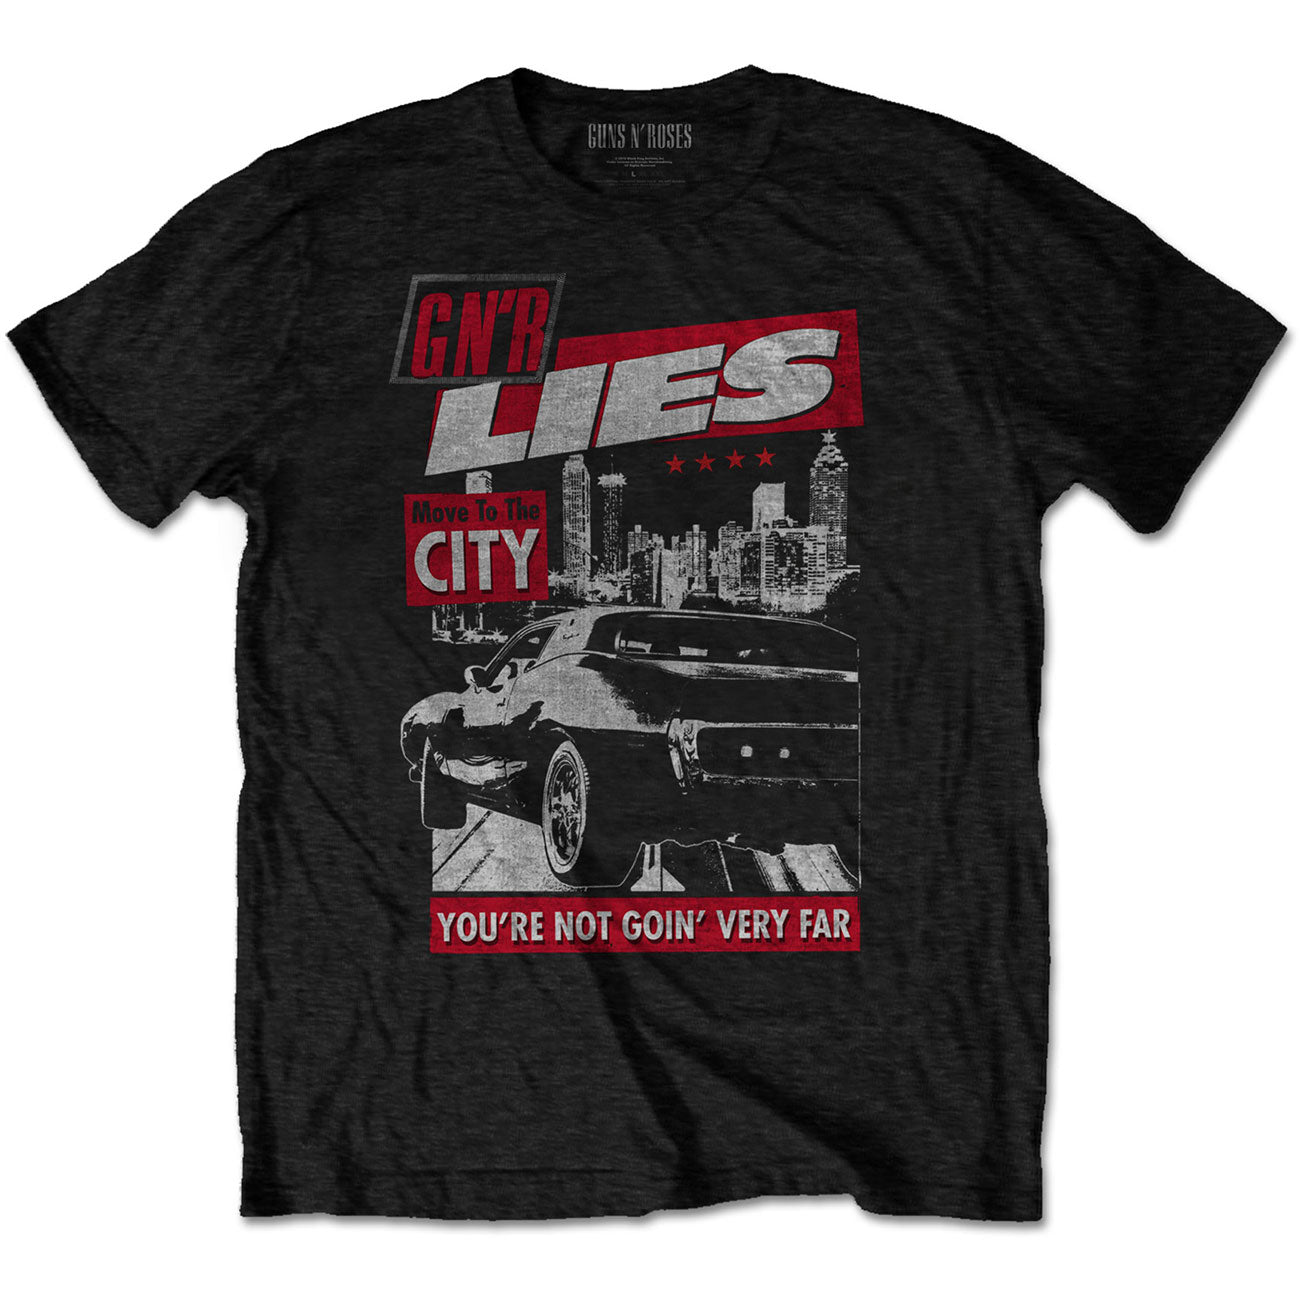 Guns N' Roses T-Shirt: Move to the City